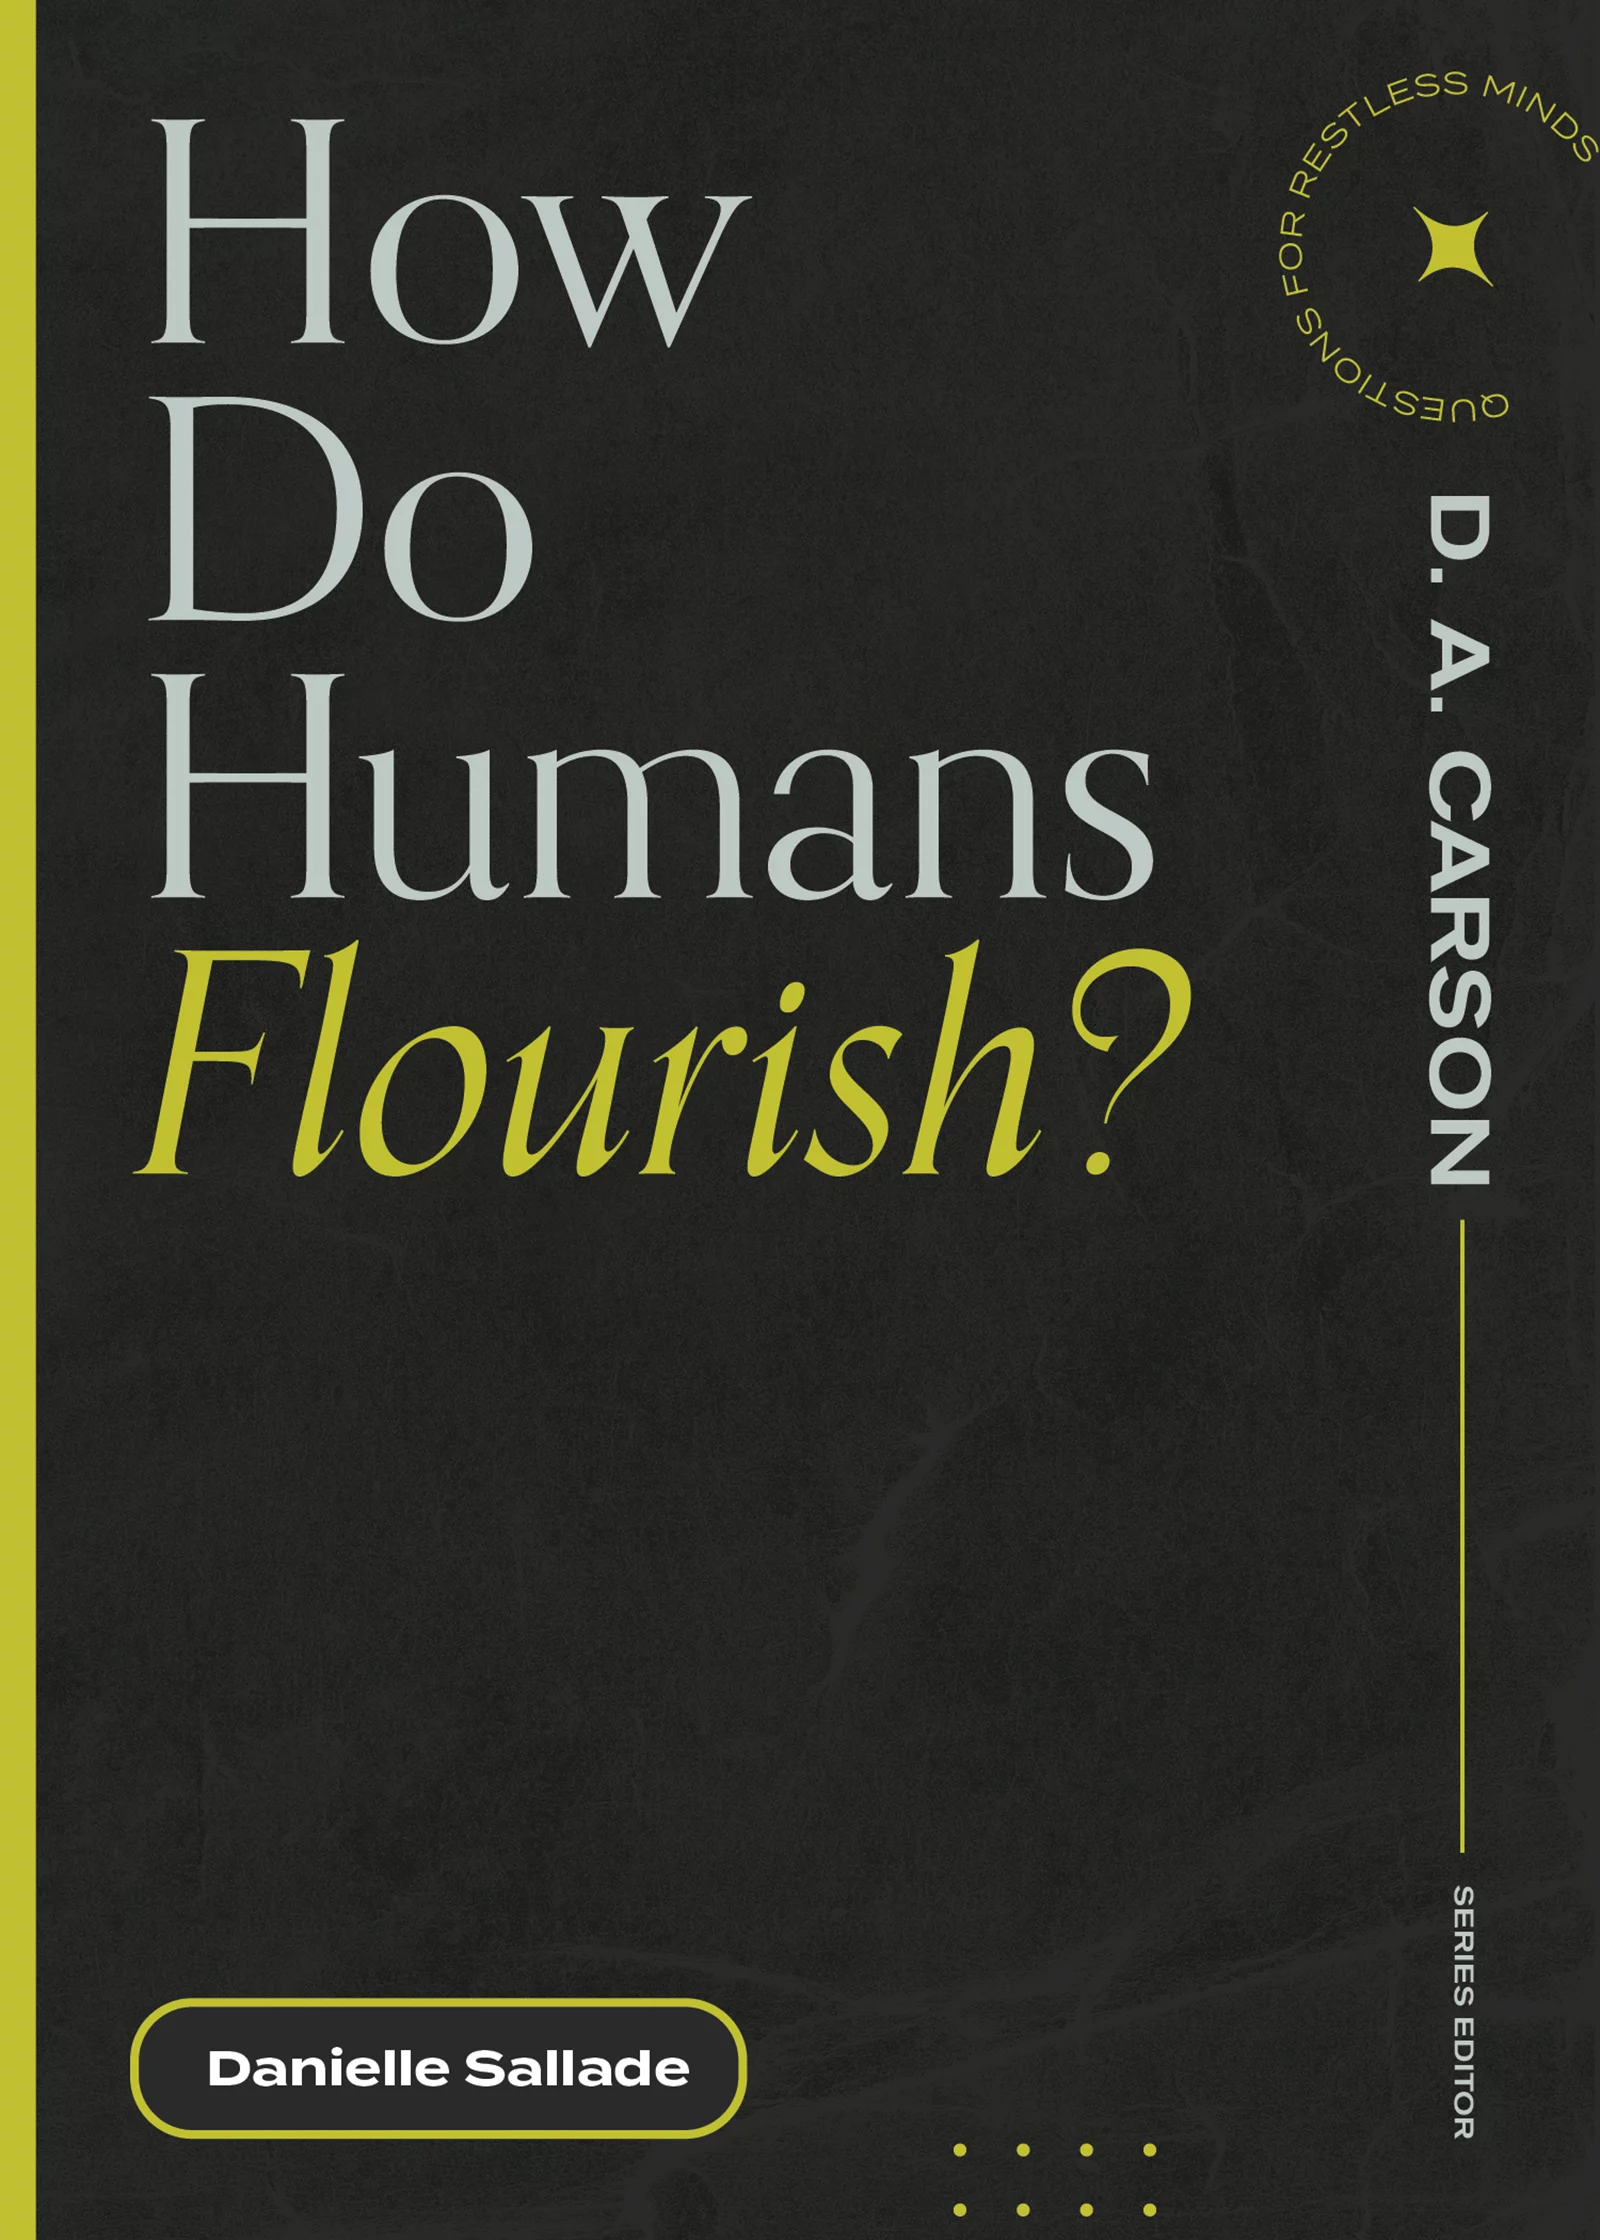  2022/08/How-do-Humans-Flourish.webp 